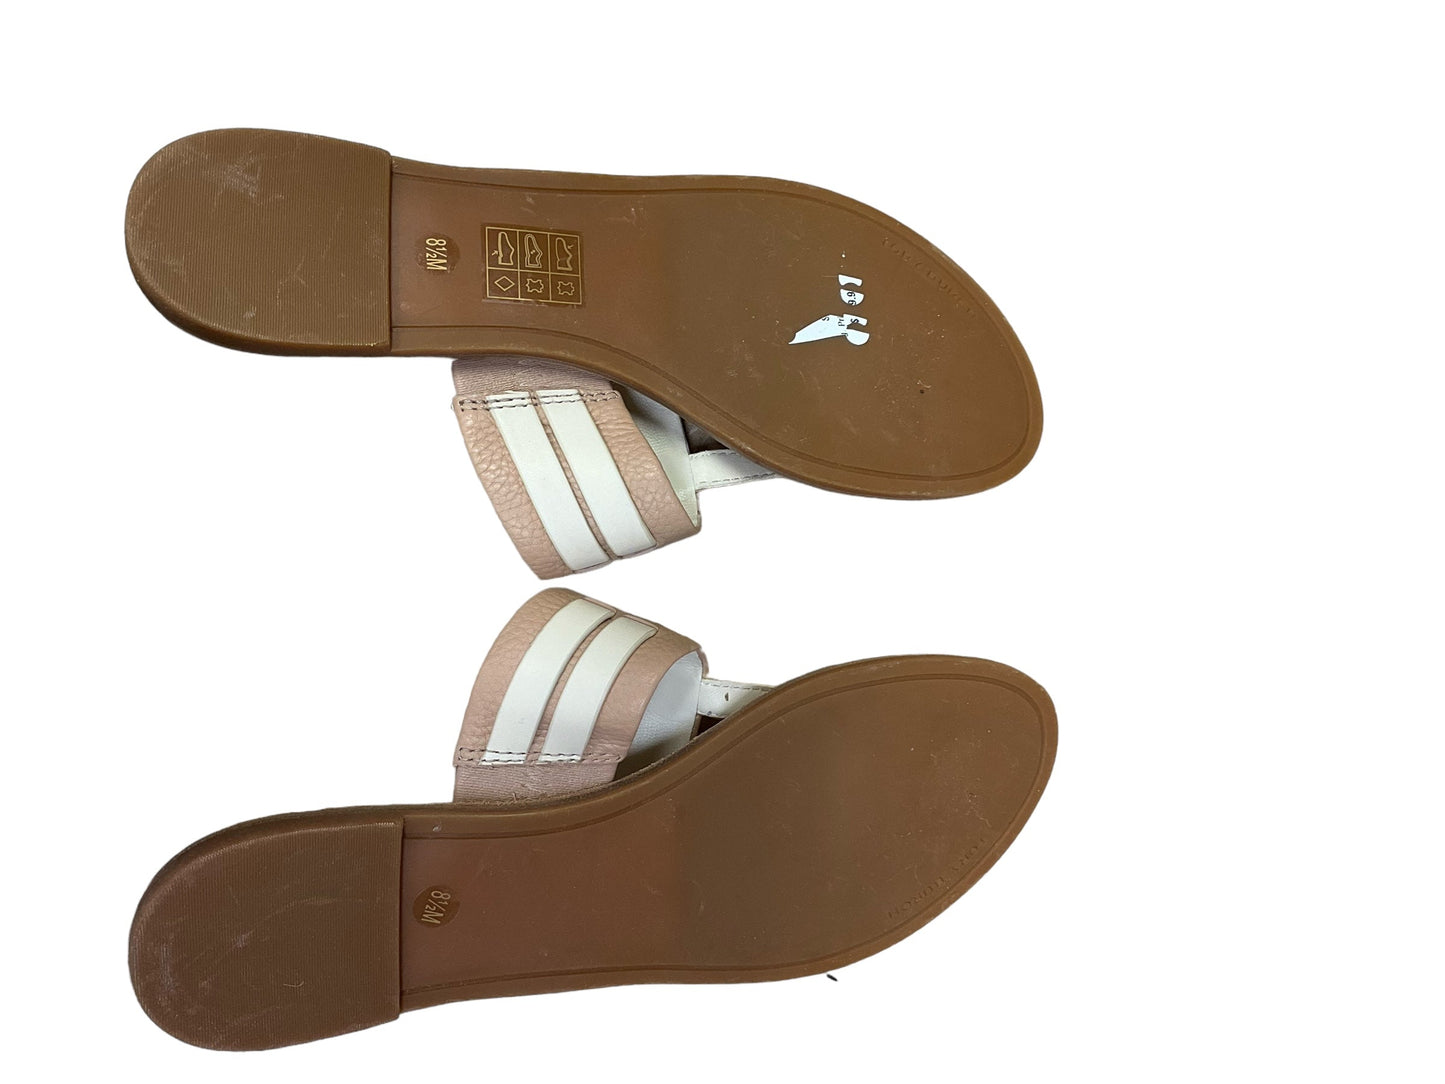 Cream & Tan Sandals Designer Tory Burch, Size 8.5